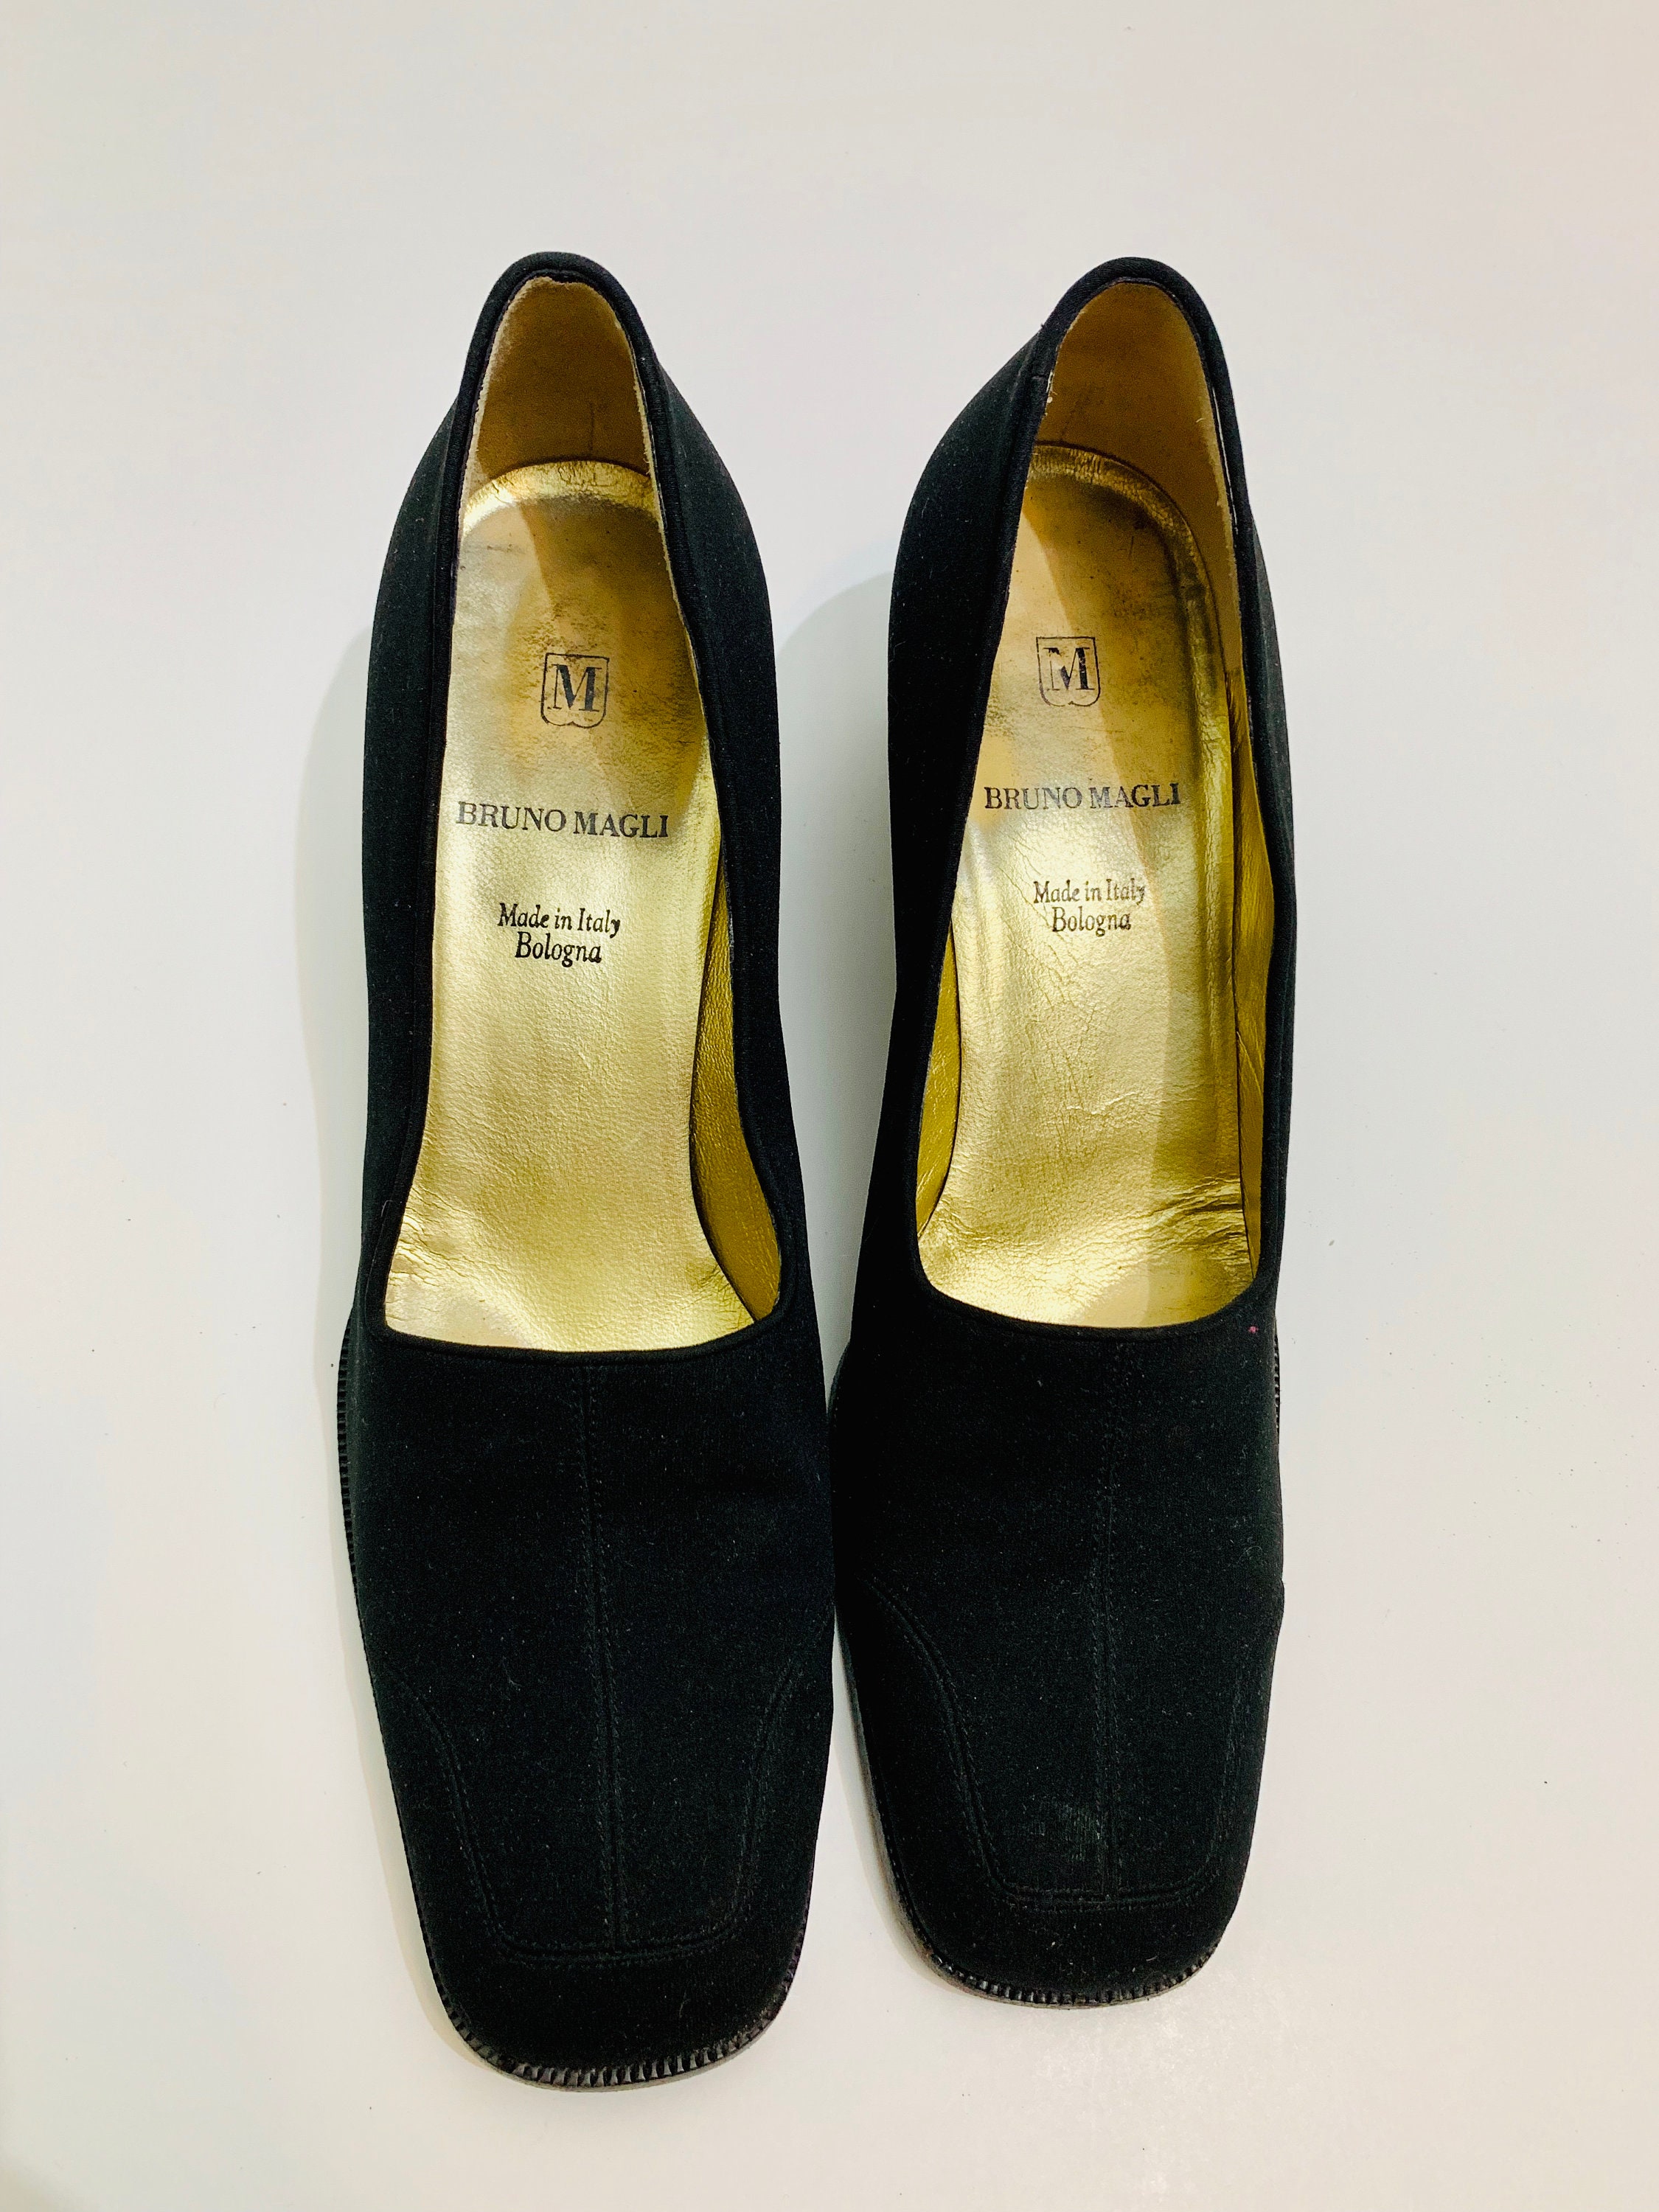 Classic Black Corporate Pumps // Vintage Office Fashion Shoes - Etsy